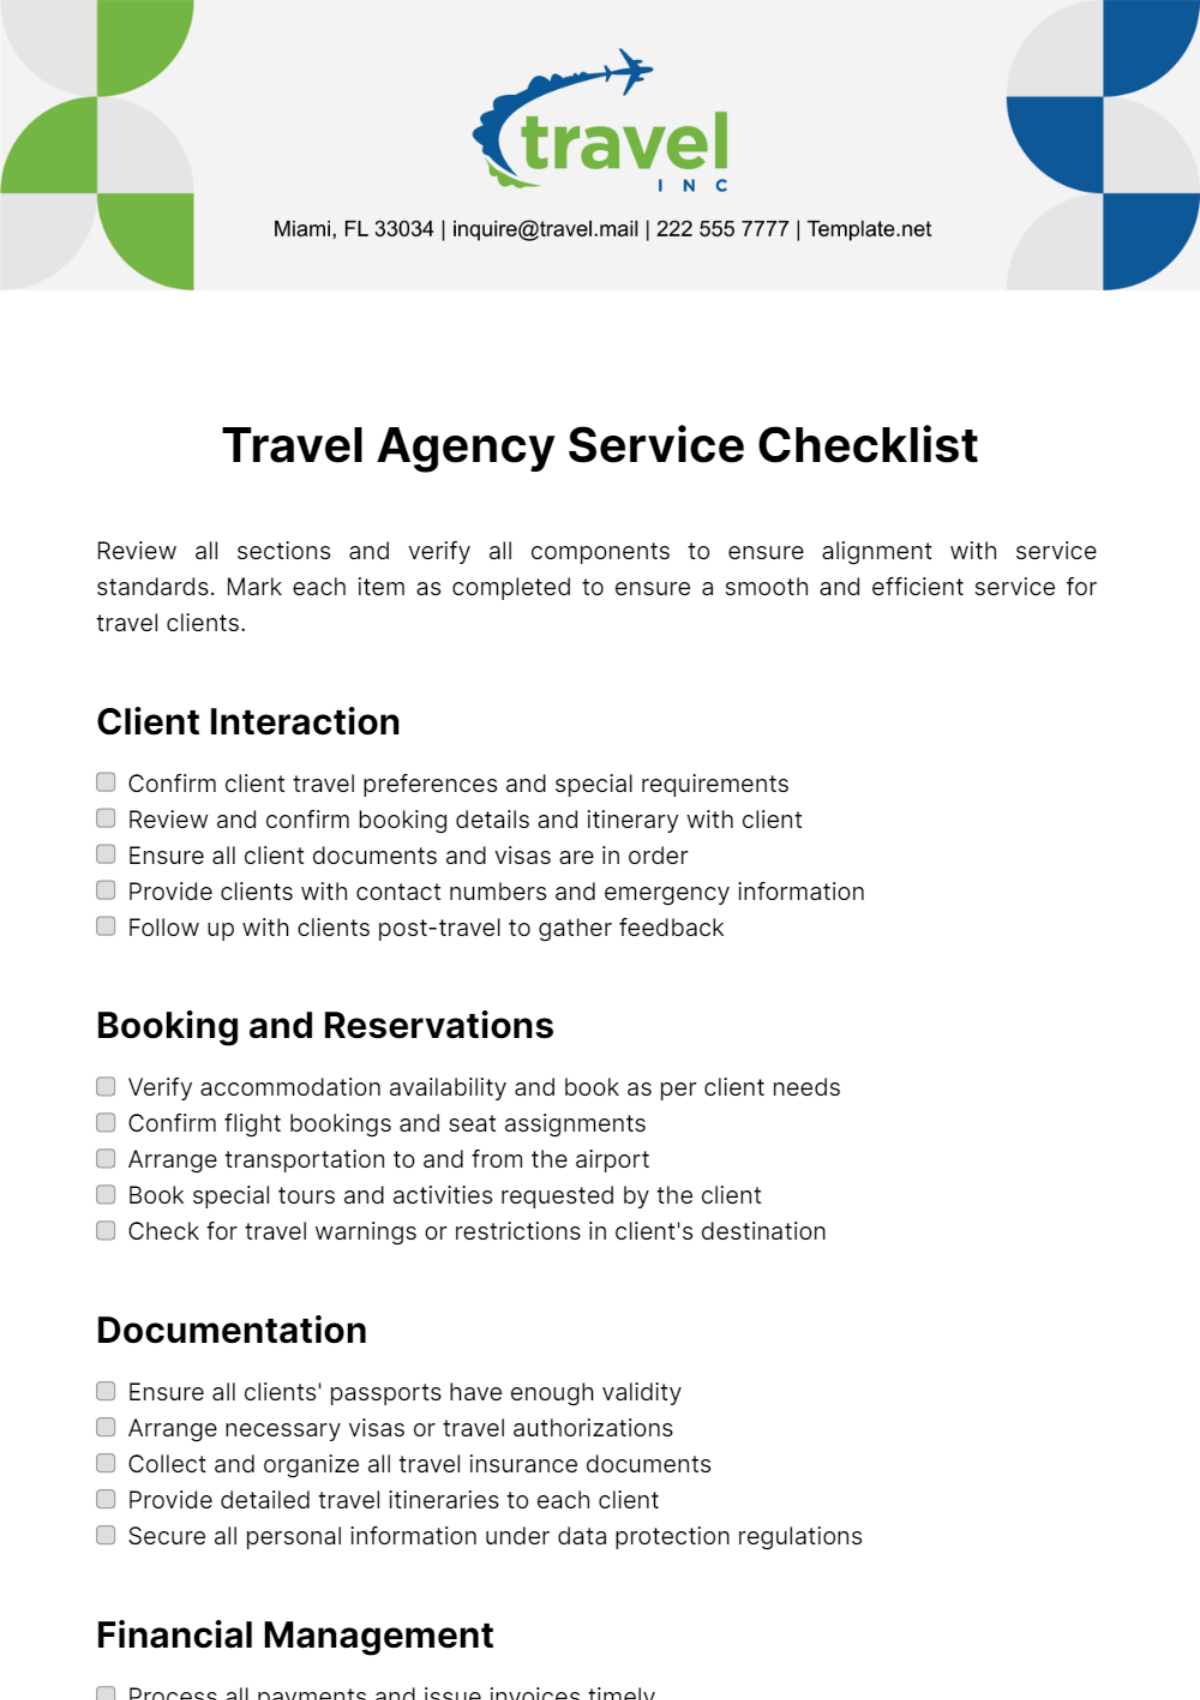 Travel Agency Service Checklist Template